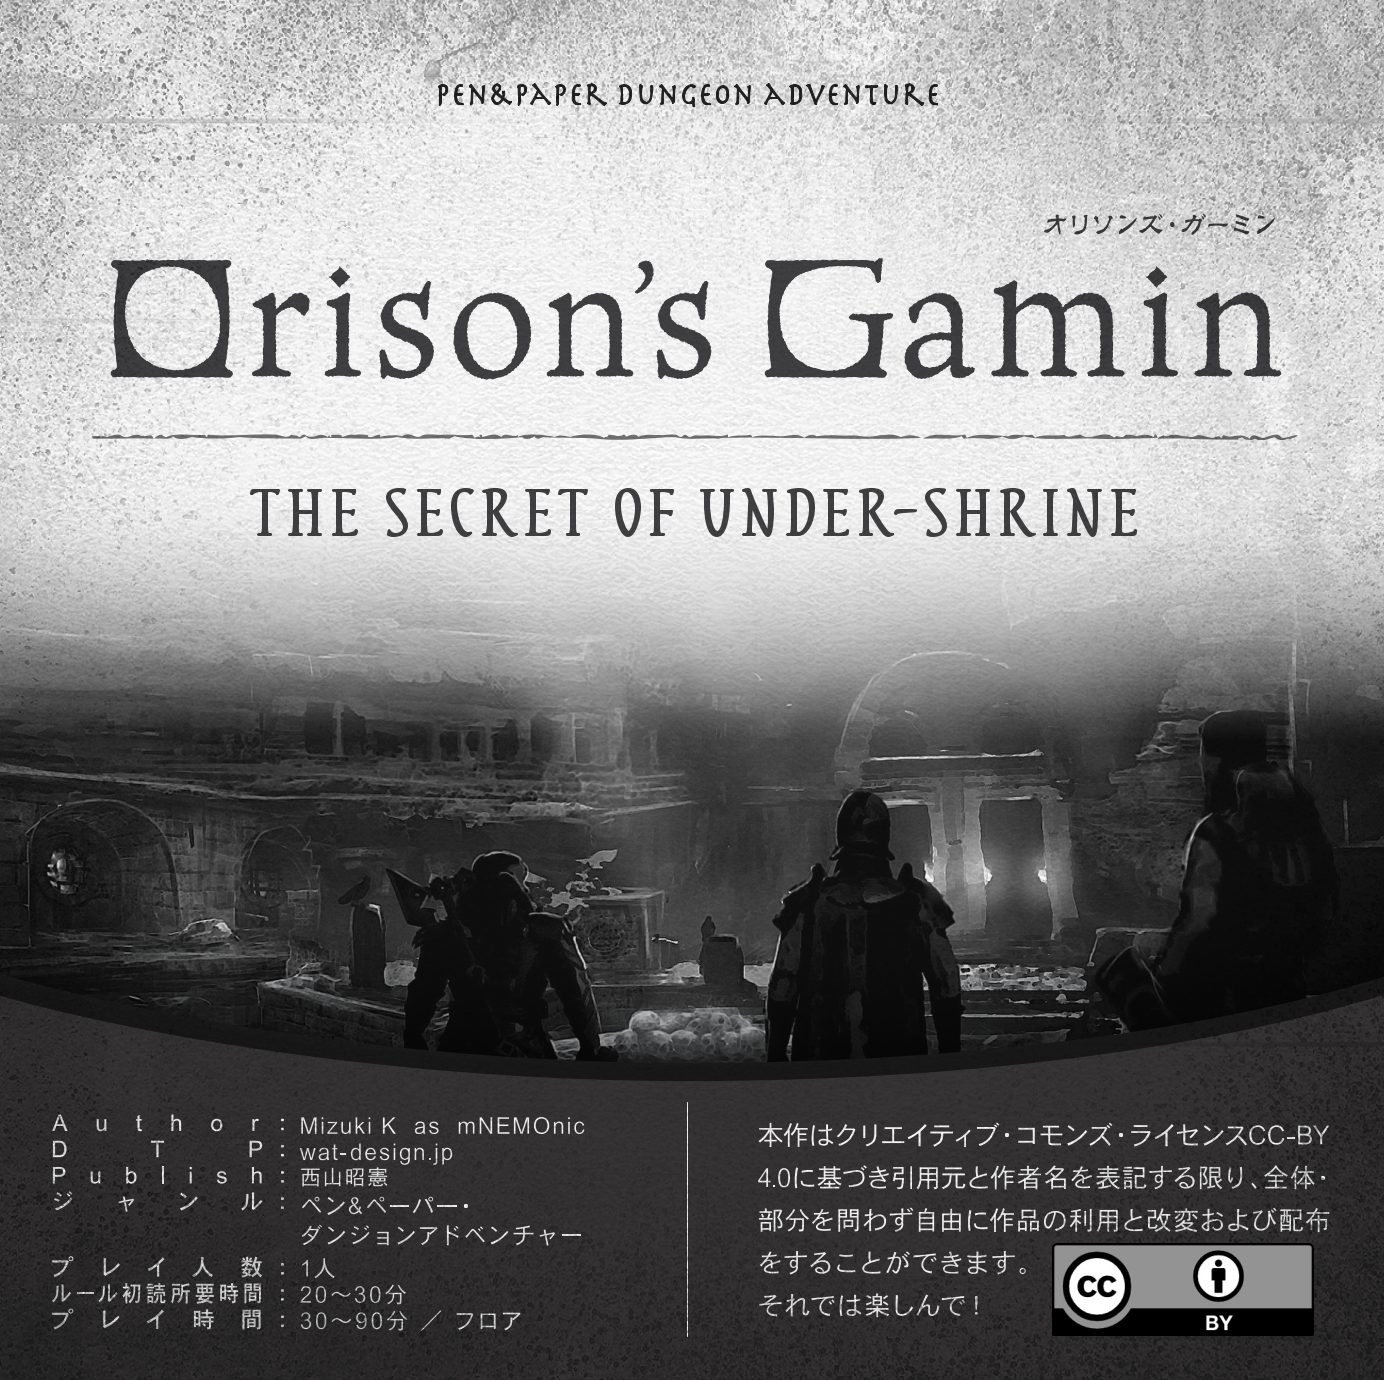 Orison’s Gamin